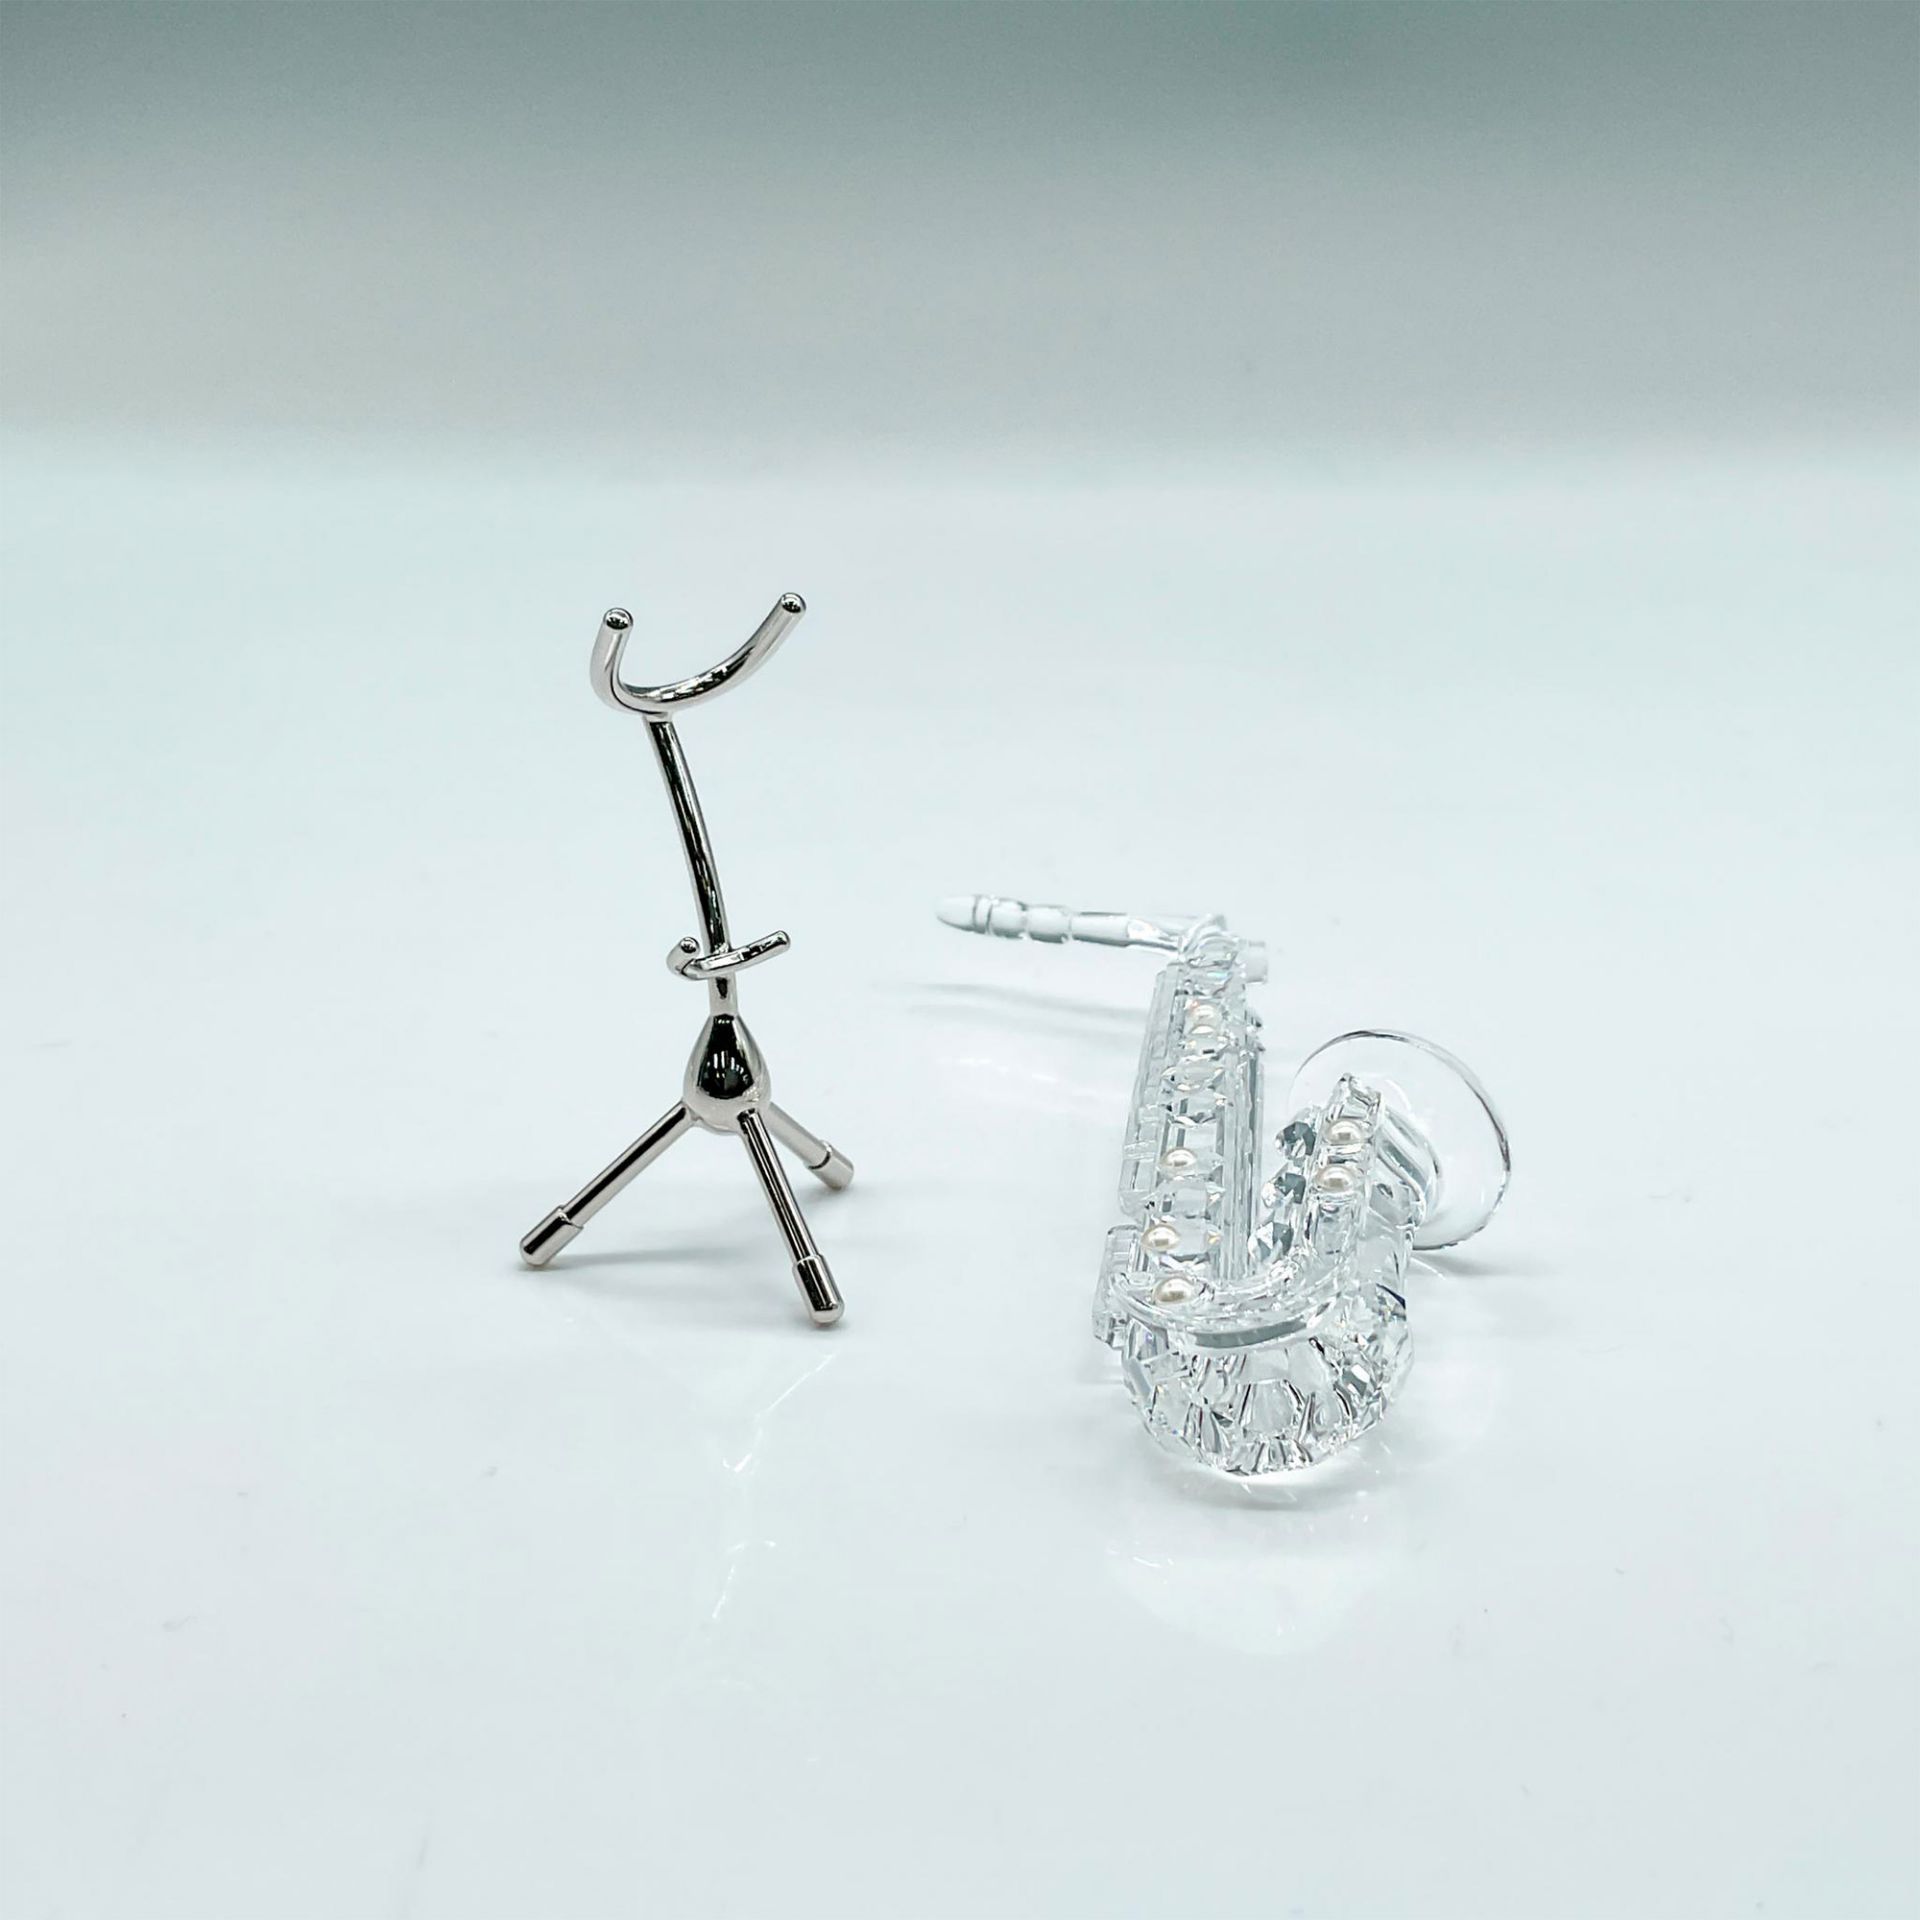 Swarovski Silver Crystal Figurine, Saxophone on Stand - Image 3 of 4